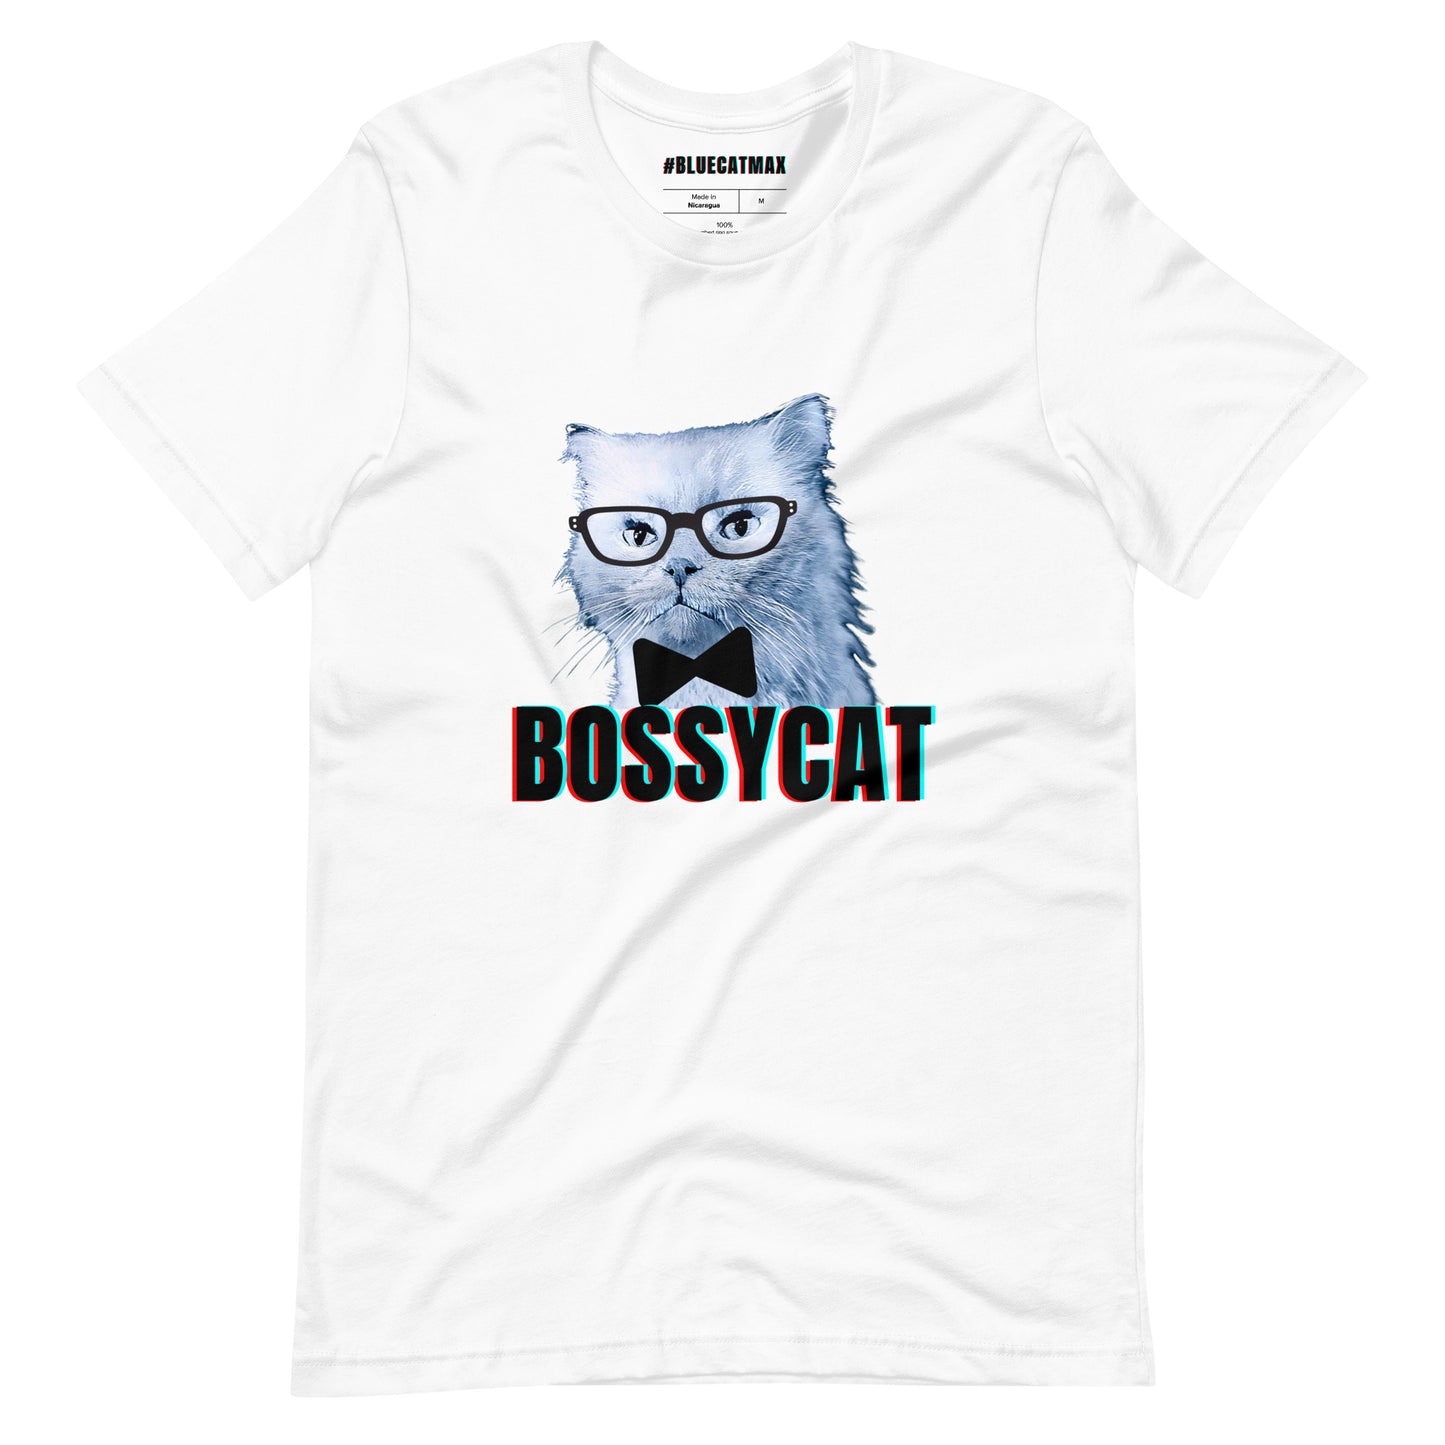 BOSSY CAT NFT Short-Sleeve Unisex Plus Size T-Shirt XS-5XL